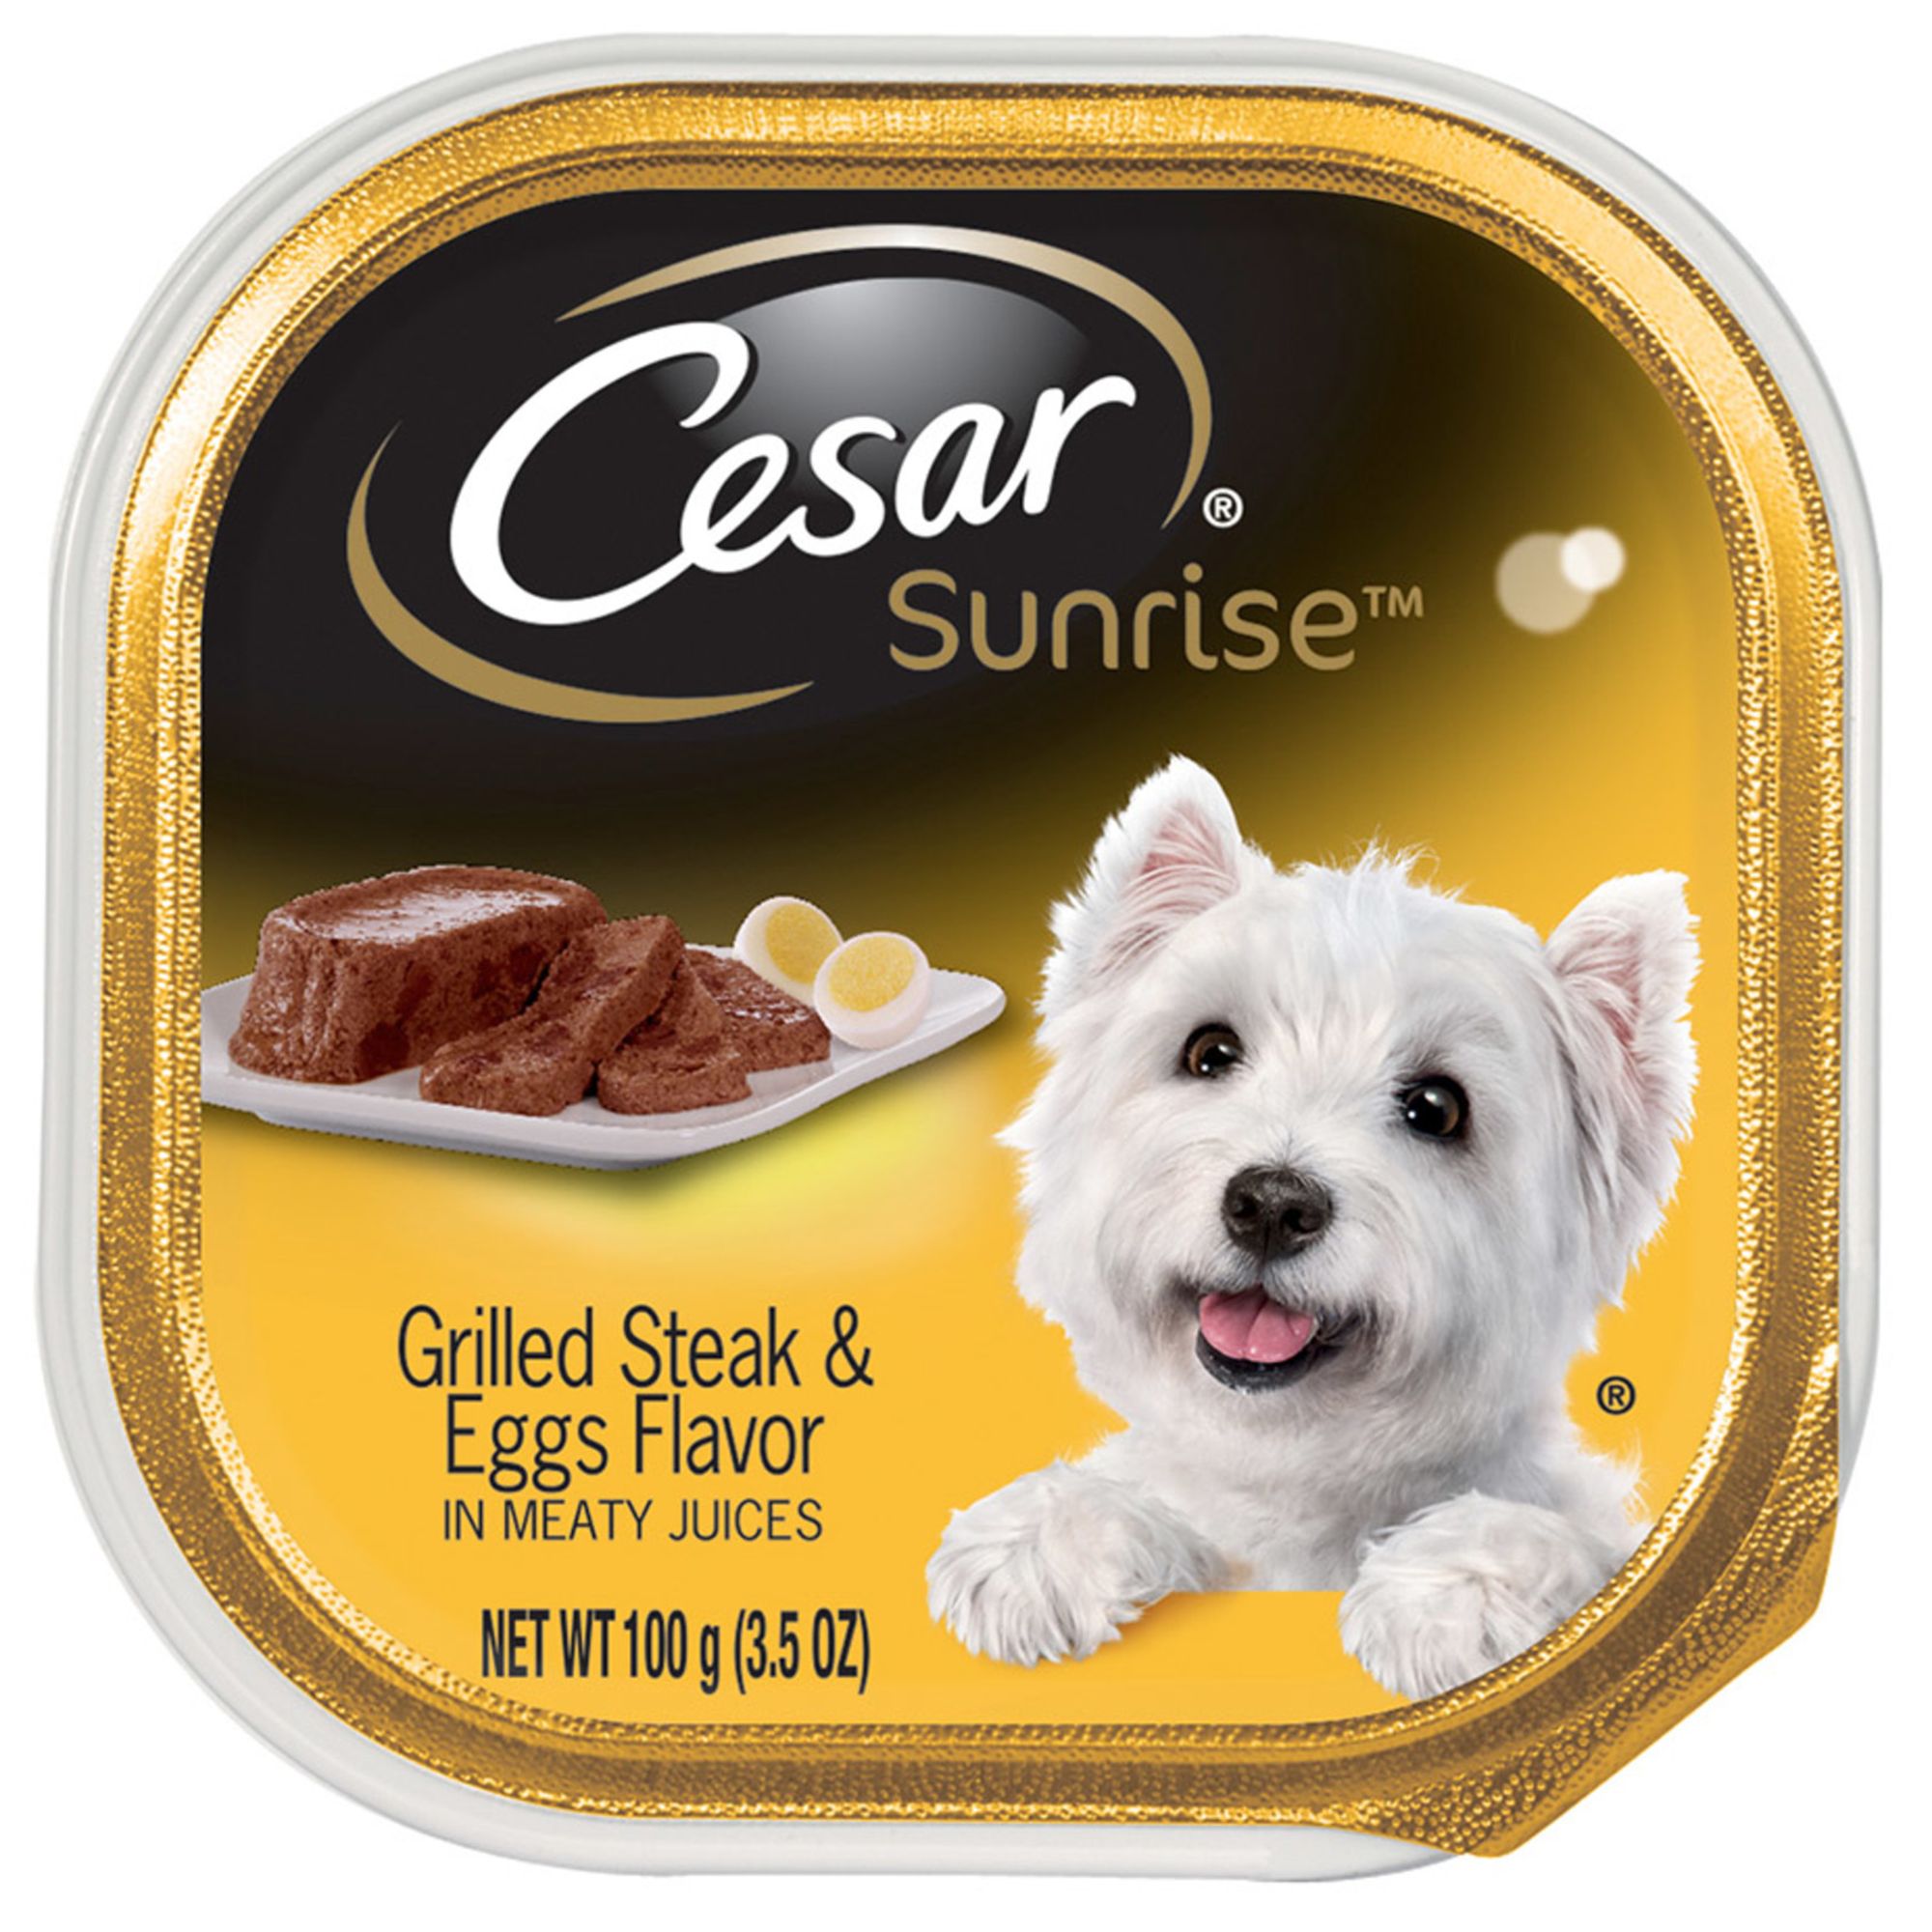 Cesar Sunrise® Canine Cuisine Adult Dog Food | dog Canned ...